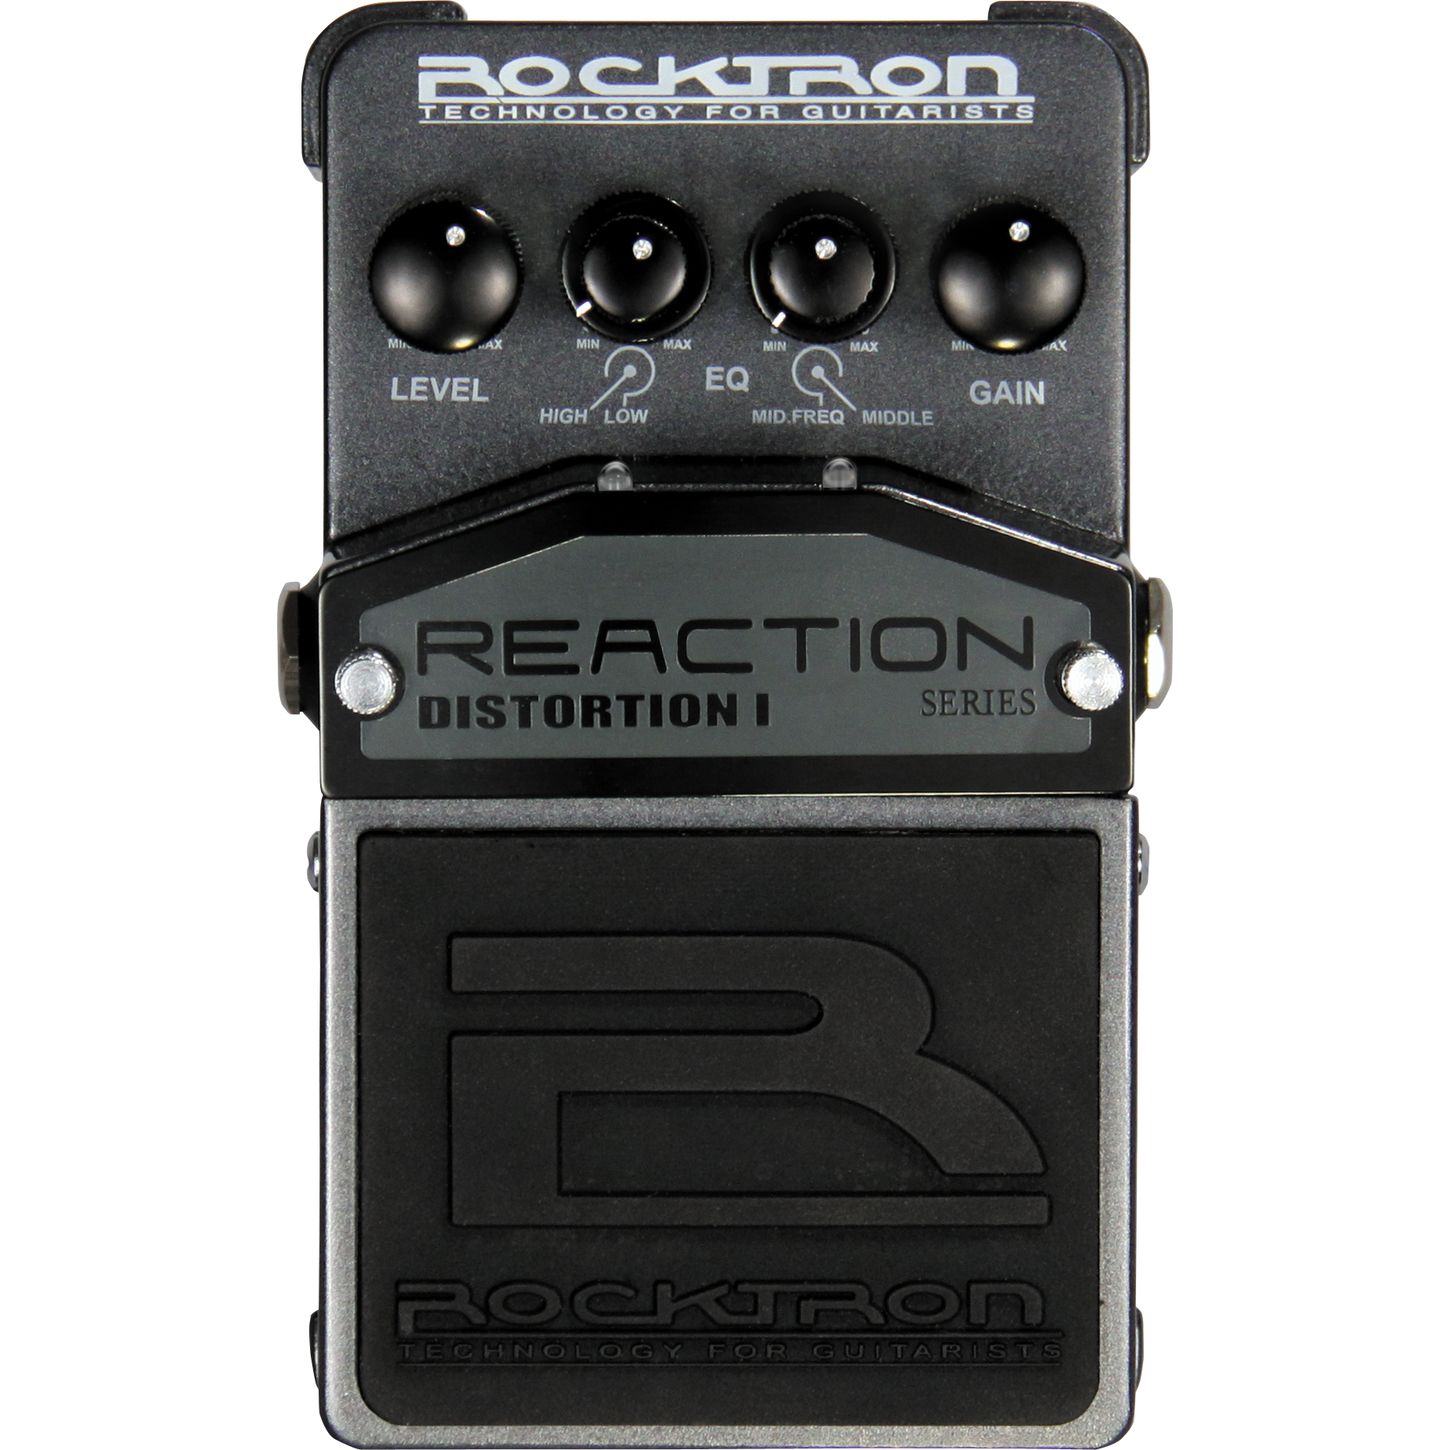 Review - Rocktron Reaction Distortion I | GuitarInternational.com